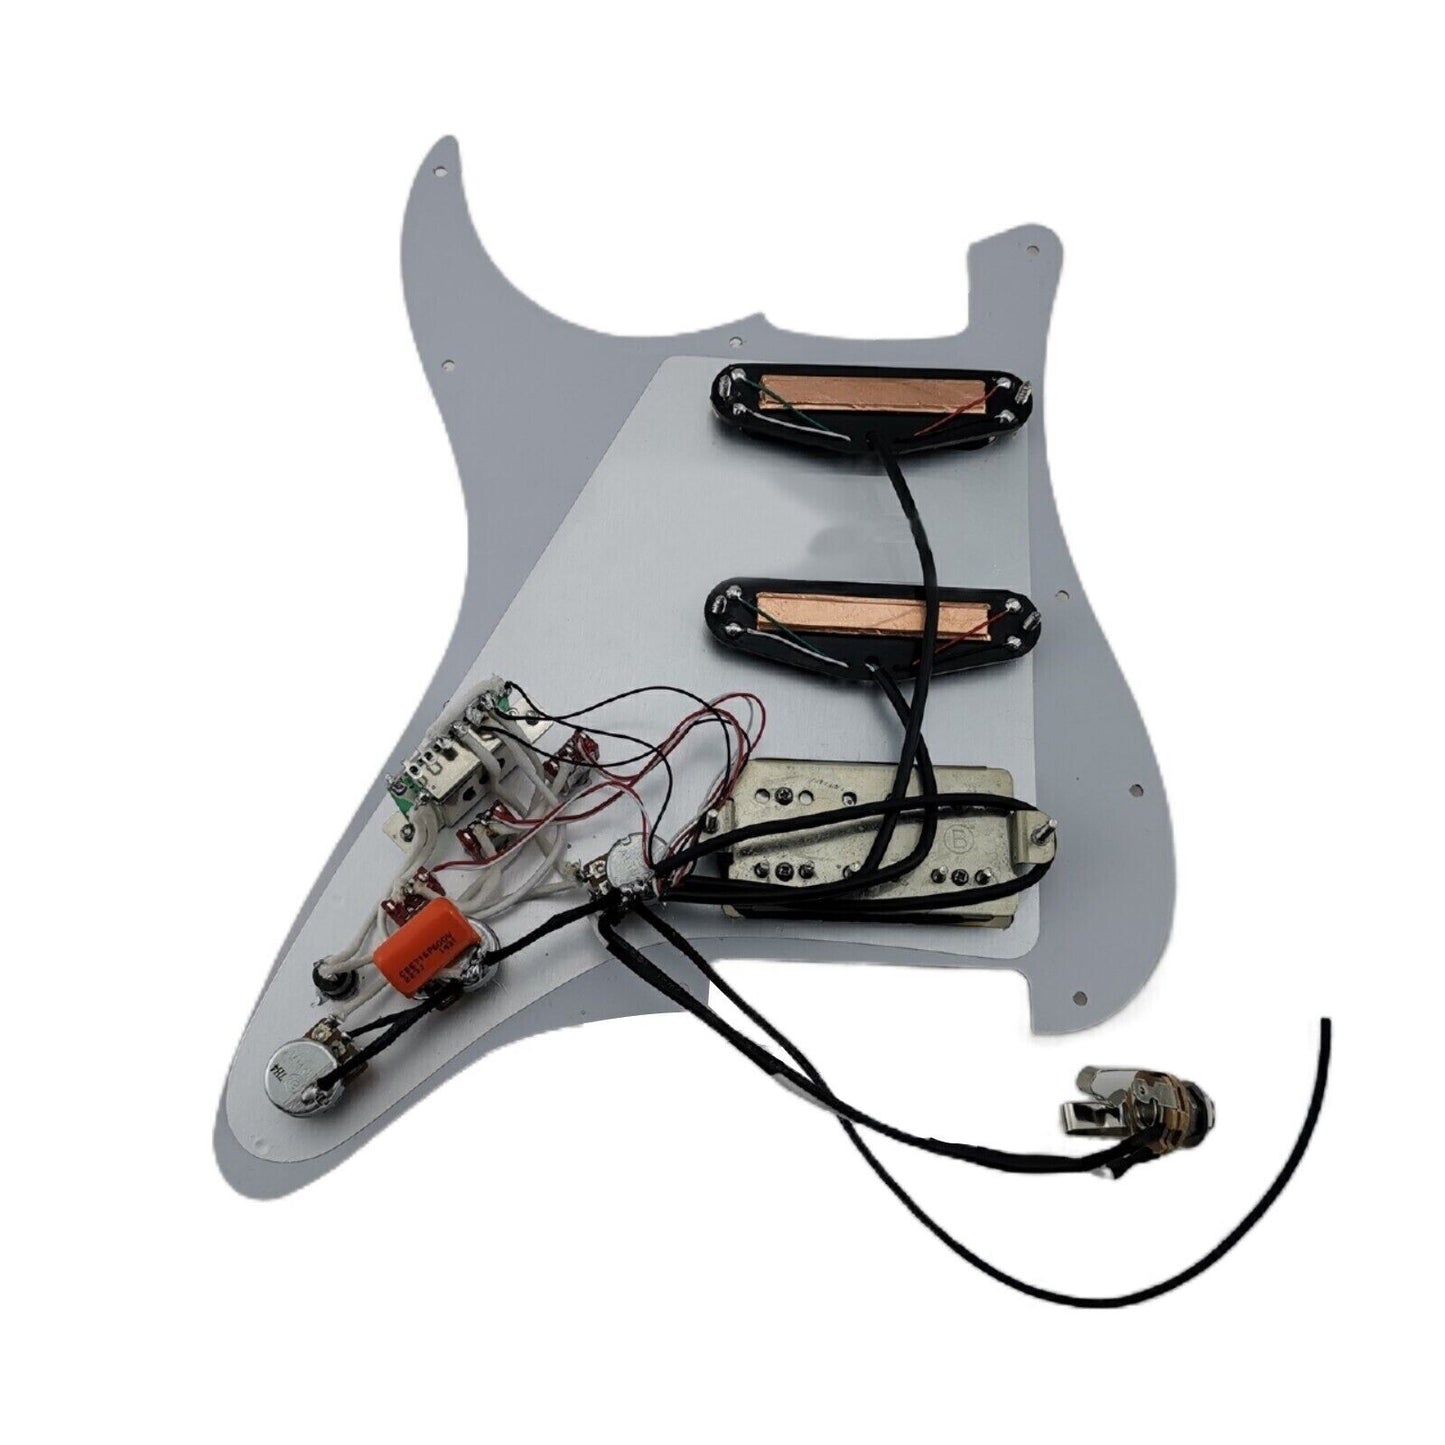 SSH Guitar Multifunction Loaded Prewired Pickguard HSS Fit Strat ST